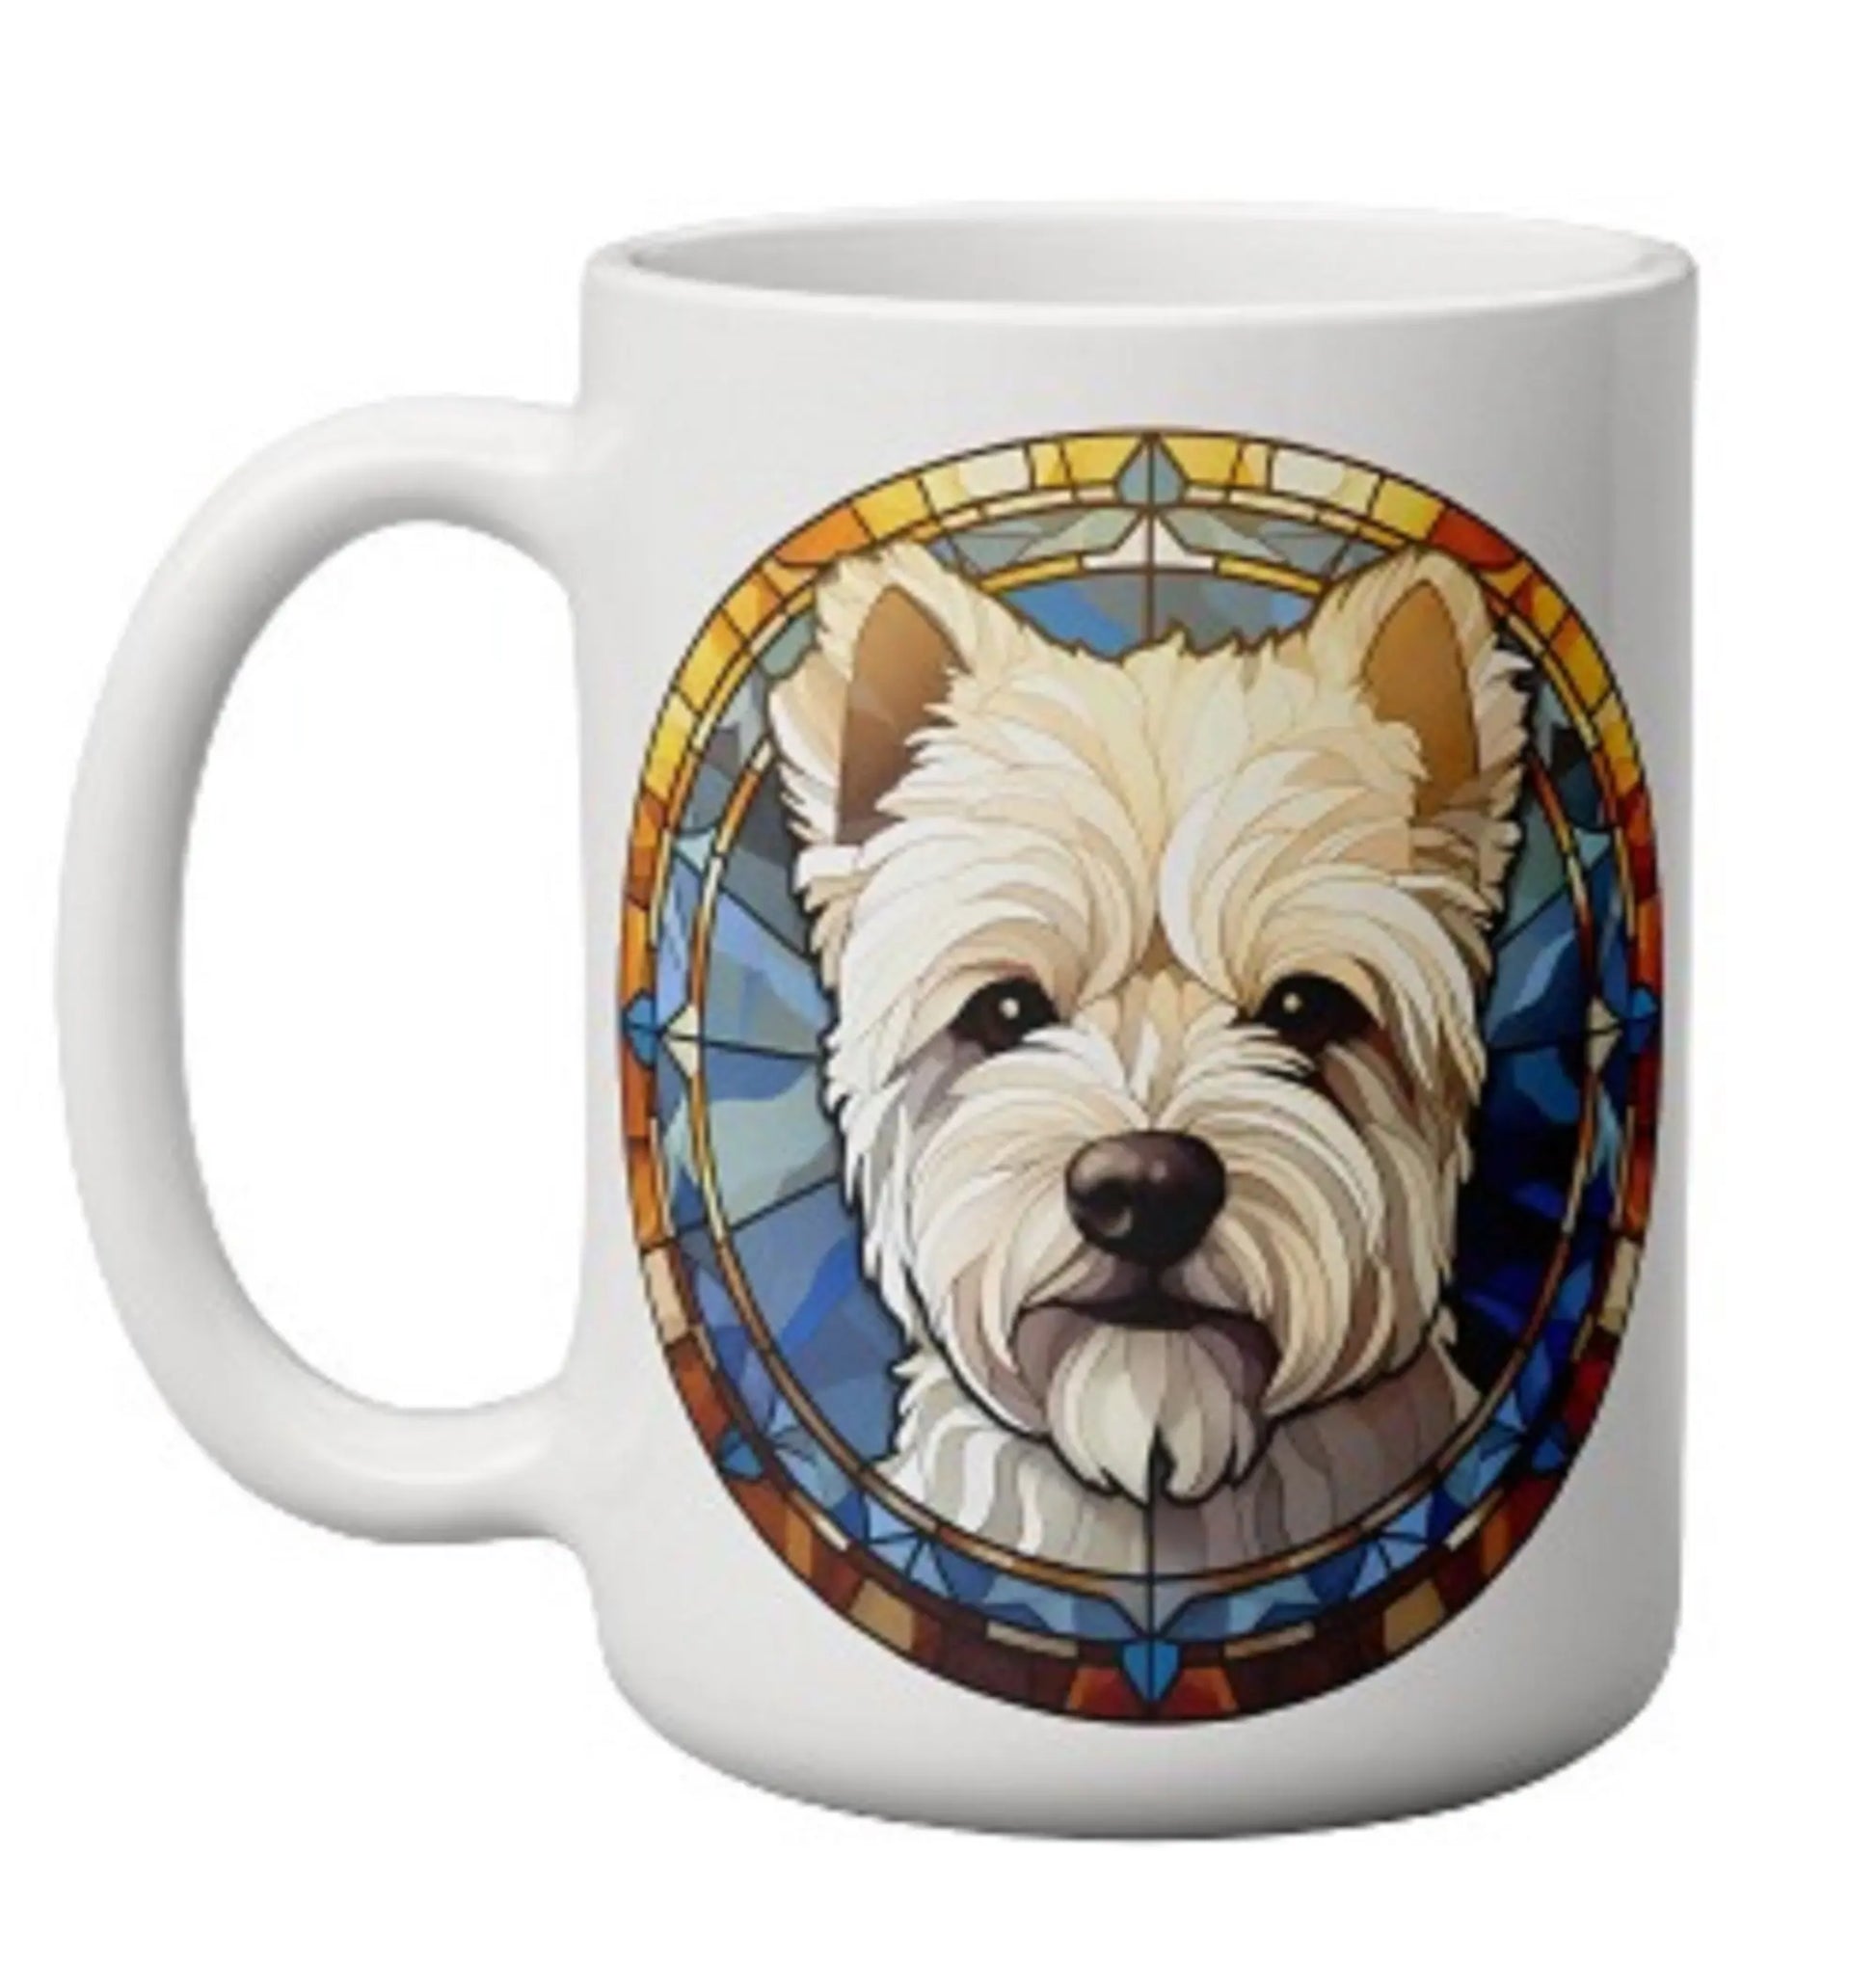  Scottie Dog Stained Window Mug by Free Spirit Accessories sold by Free Spirit Accessories